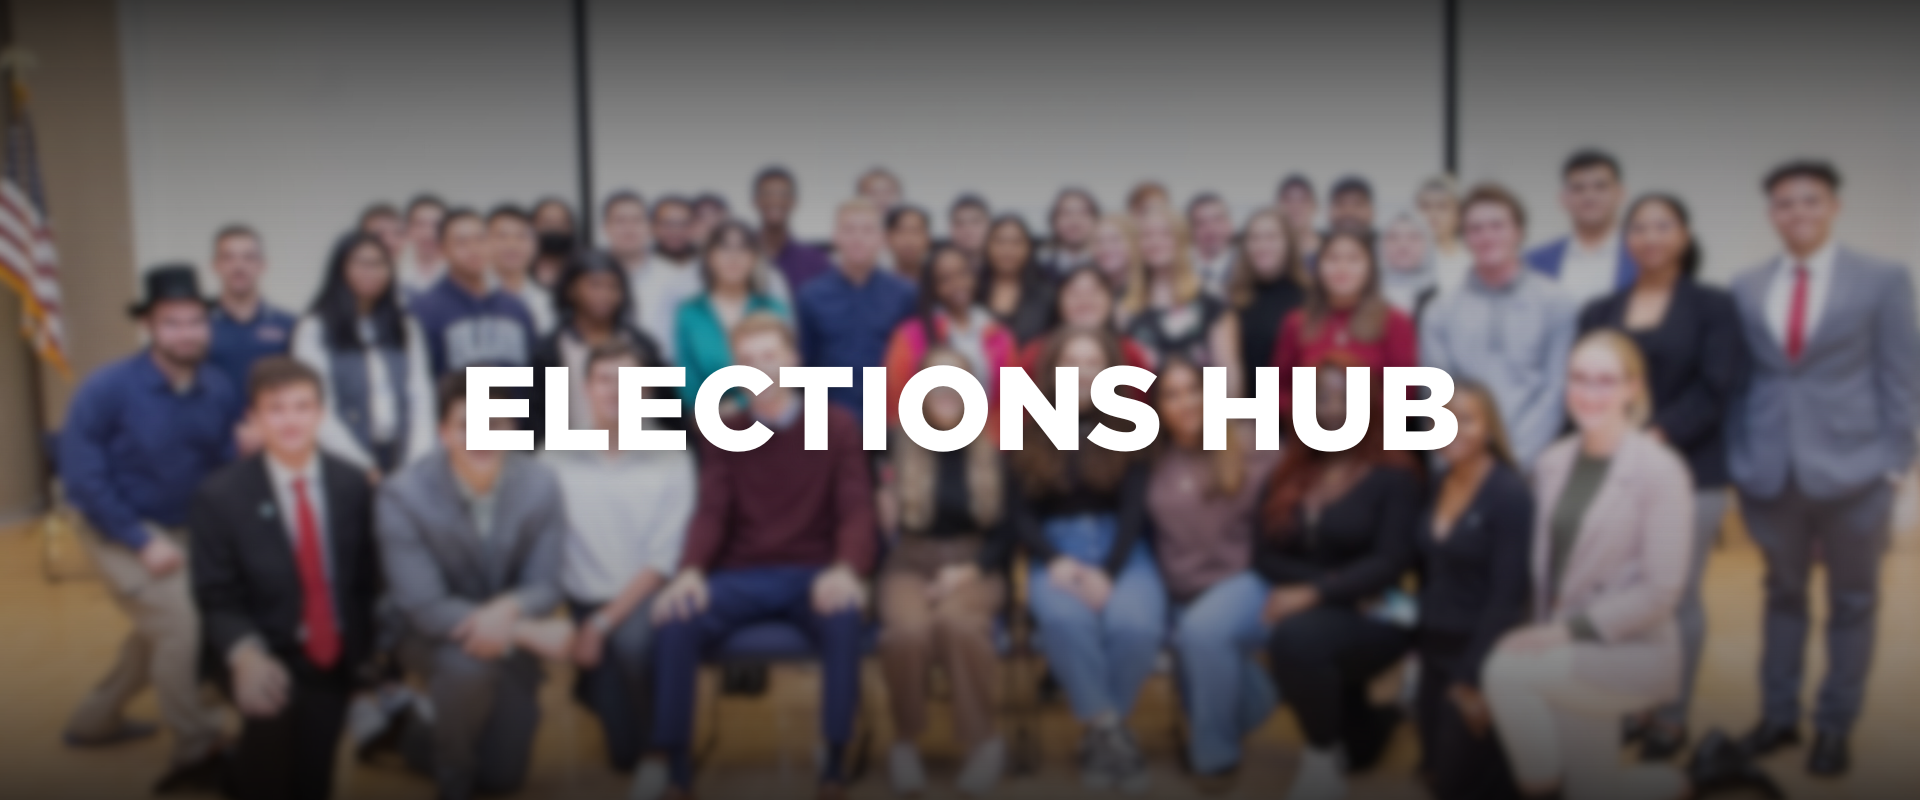 Elections Hub